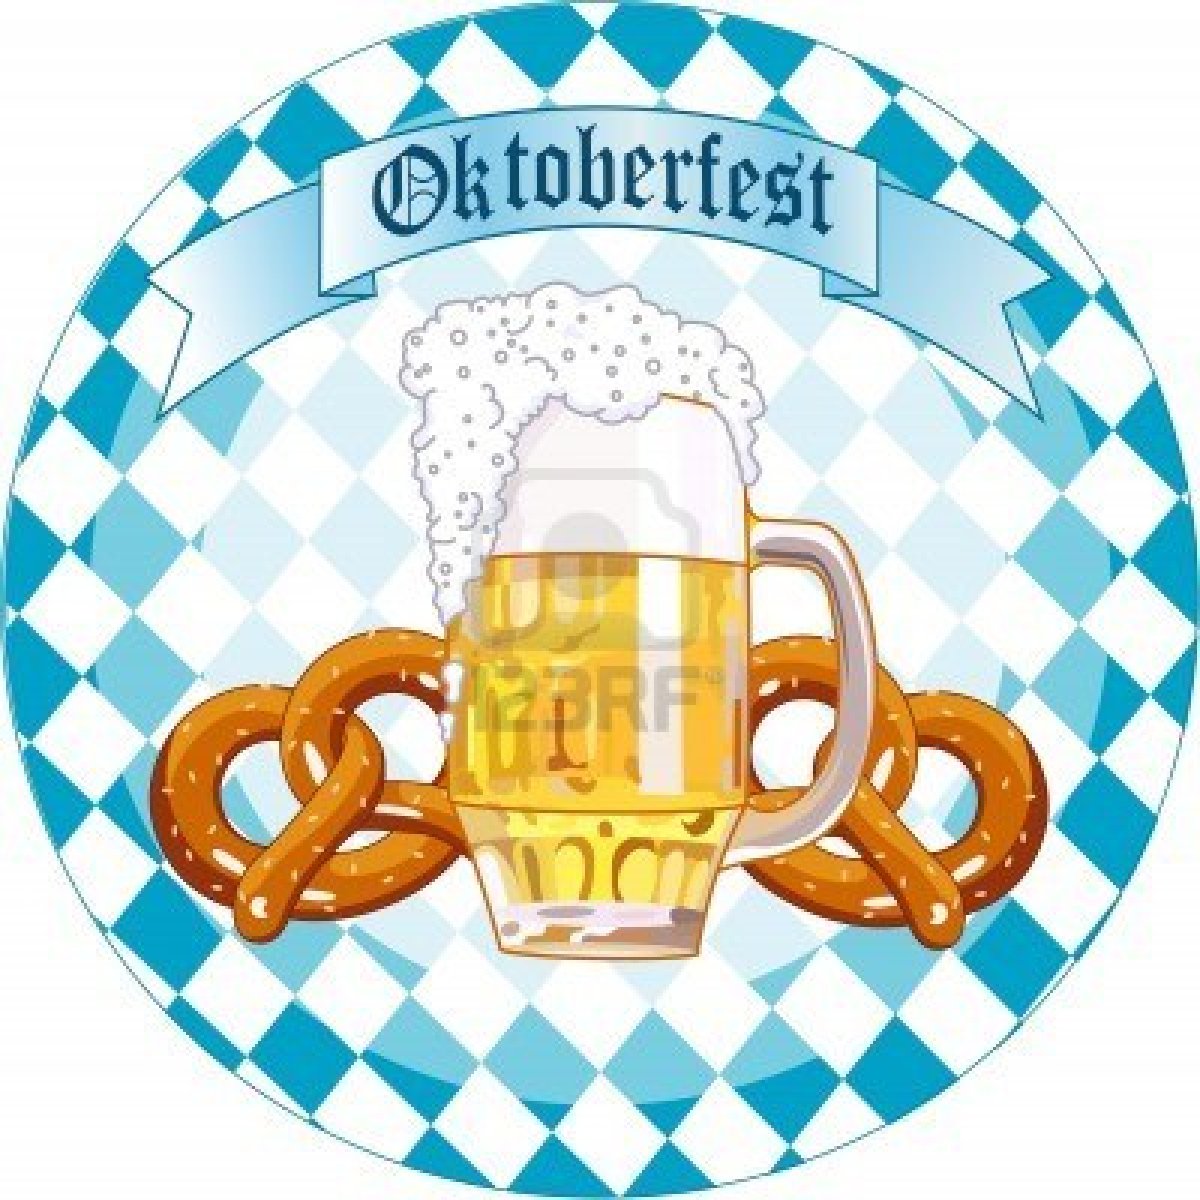 7628226 Round Oktoberfest Celebration Design With Beer And Pretzel